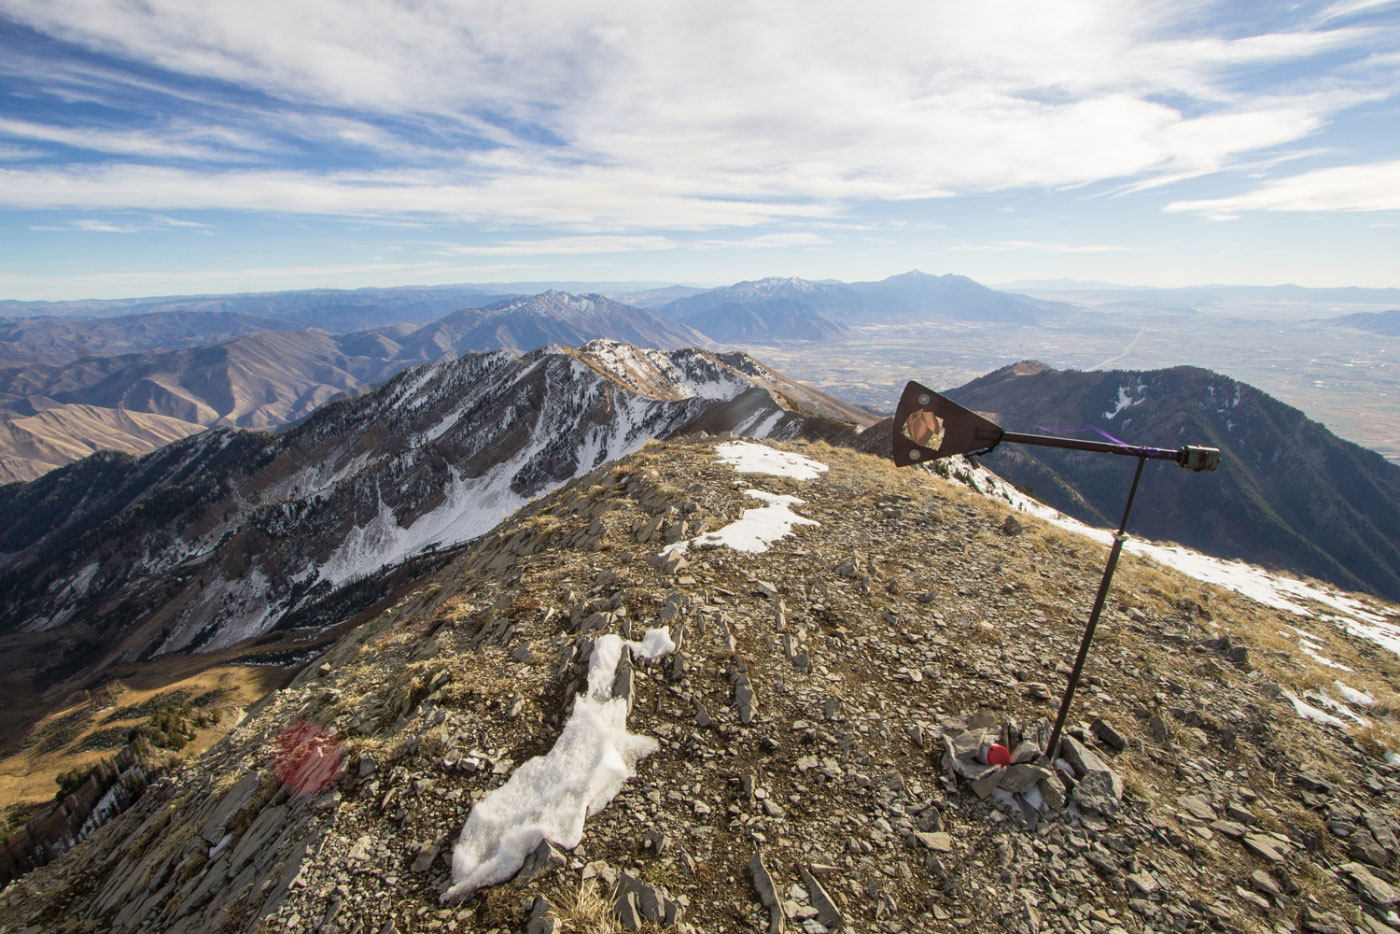 Hike Provo Peak via Slide Canyon Trail in Uinta National Forest, Utah - Stav is Lost